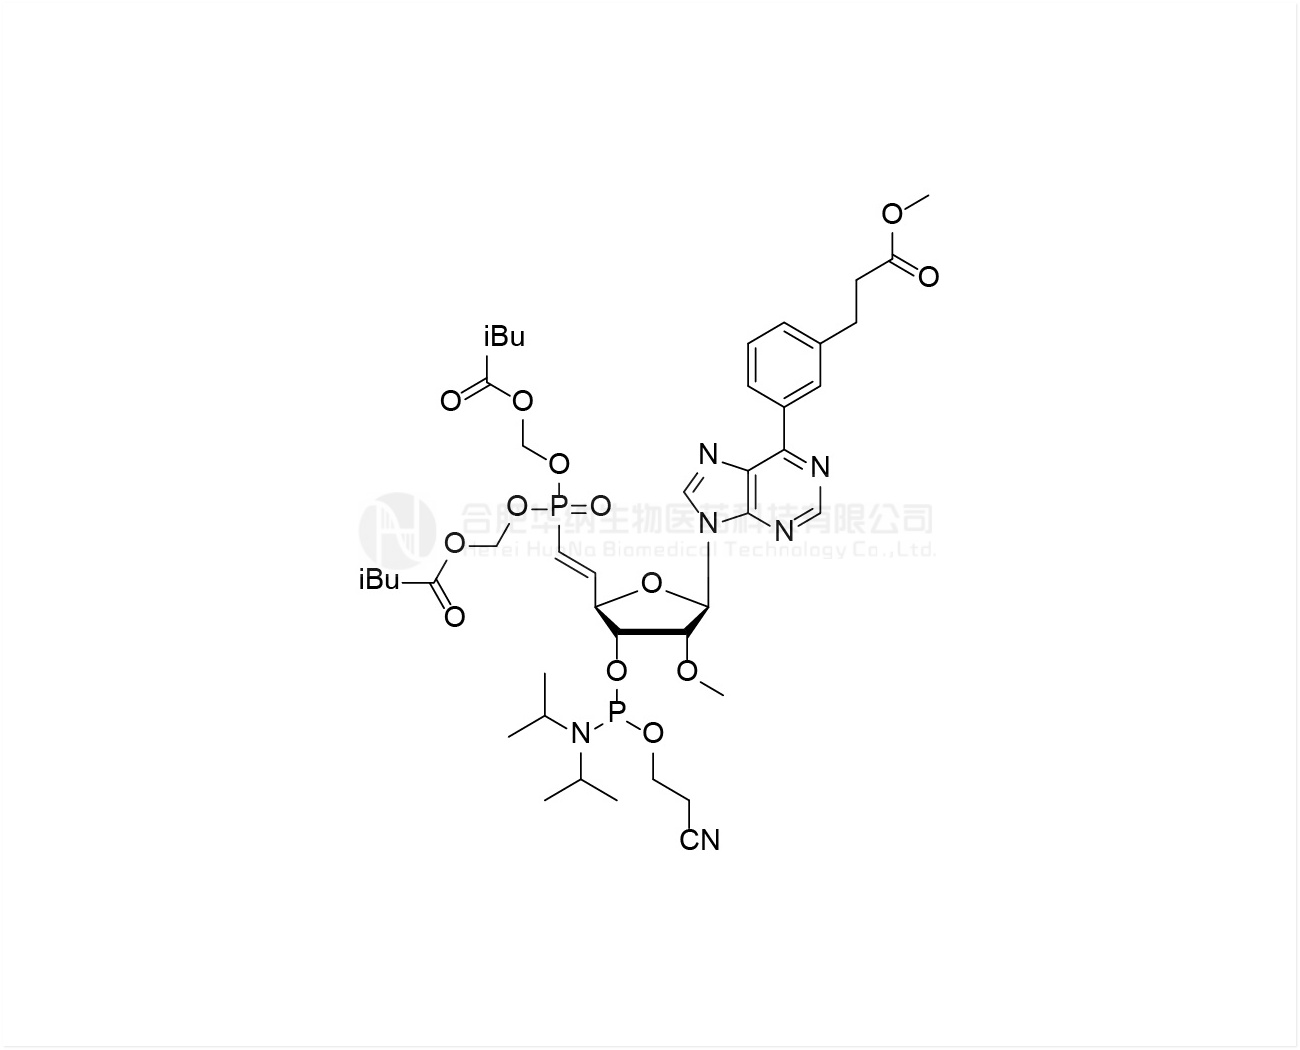 5'-POM-(E)-vinyl phosphonate-2'-O-Me-6-Deamino-6-(m-benzenepropanoic acid methyl ester)-rA-3'- CE-Phosphoramidite